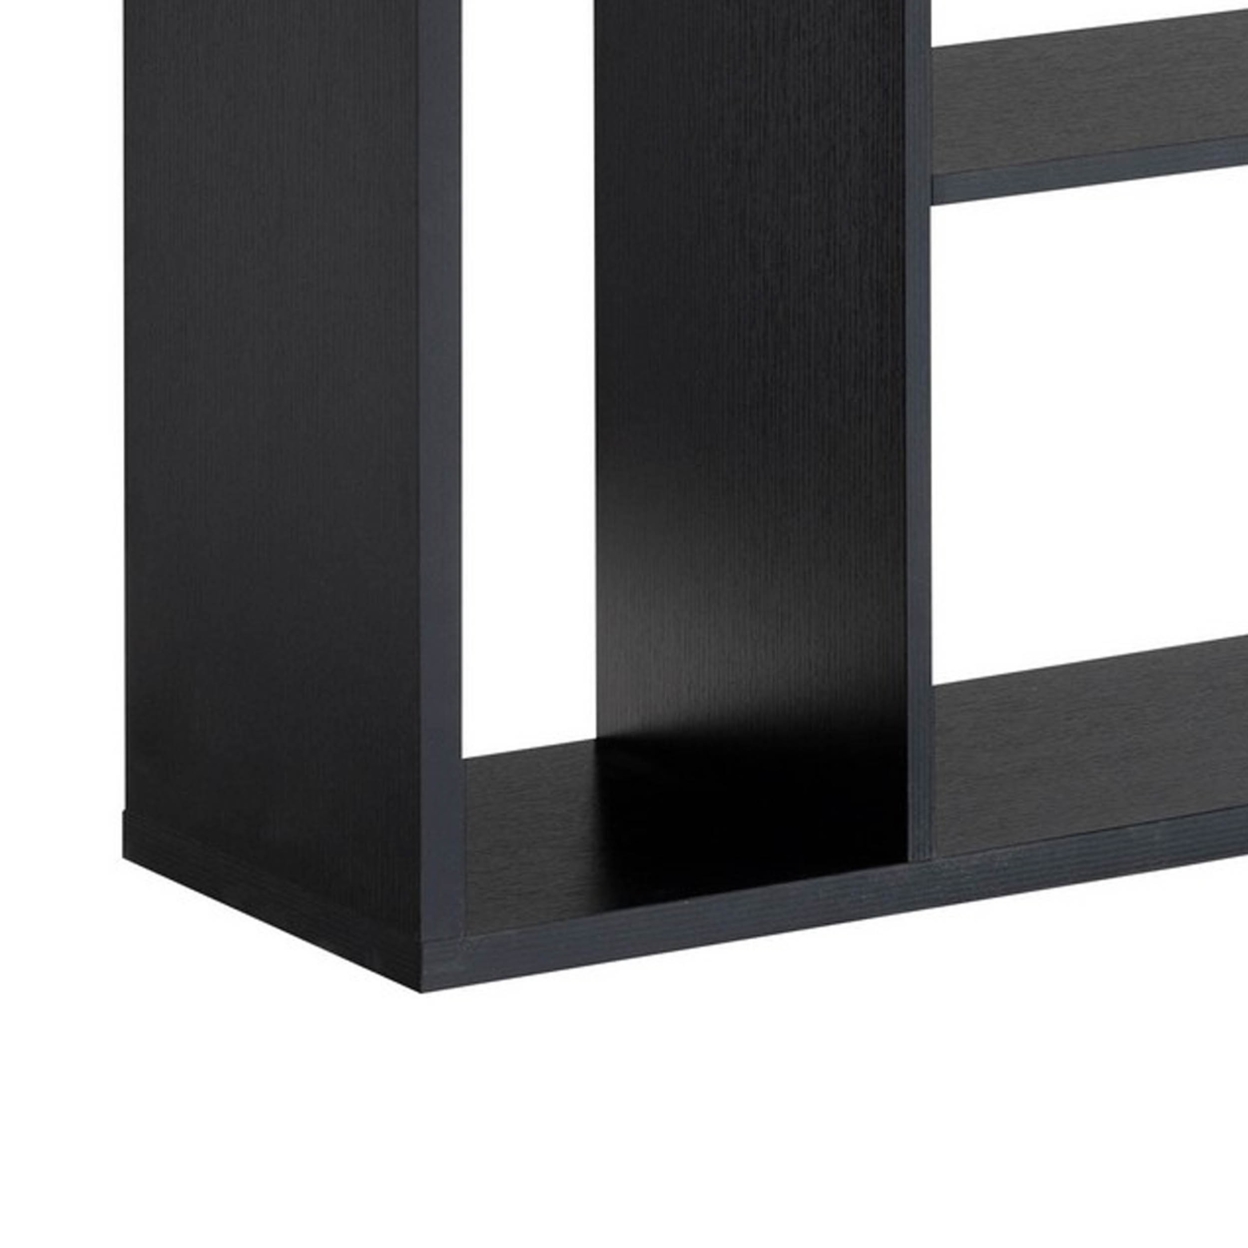 69 Inch Modern Display Cabinet With 7 Multilevel Shelves, 3 Doors, Black- Saltoro Sherpi